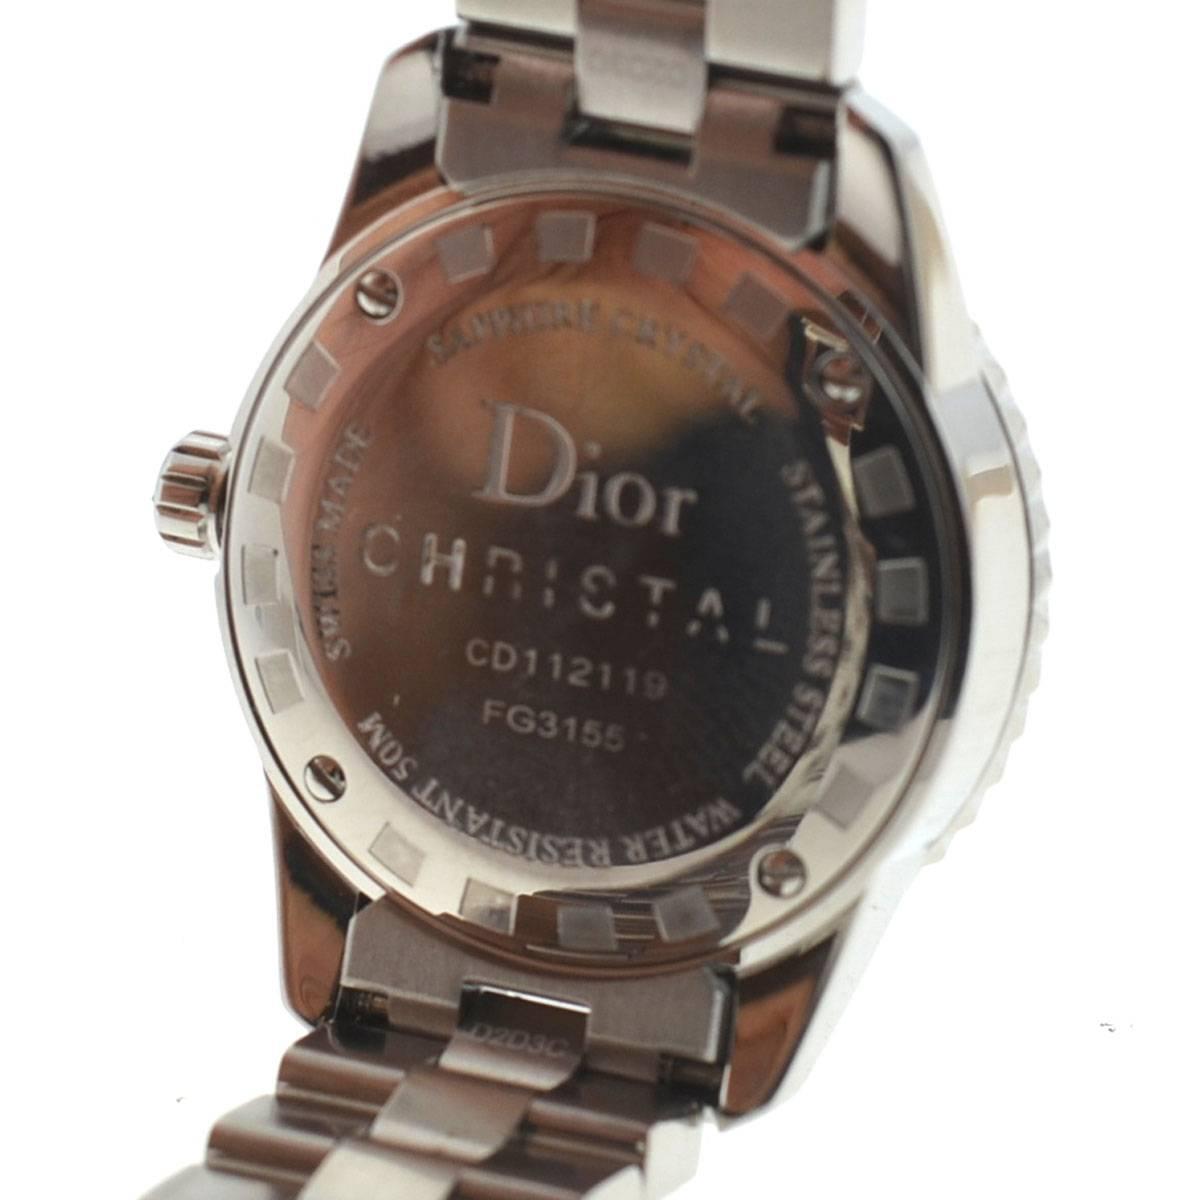 Christian Dior Christal CD112119 Diamond Bezel Ladies Watch 4